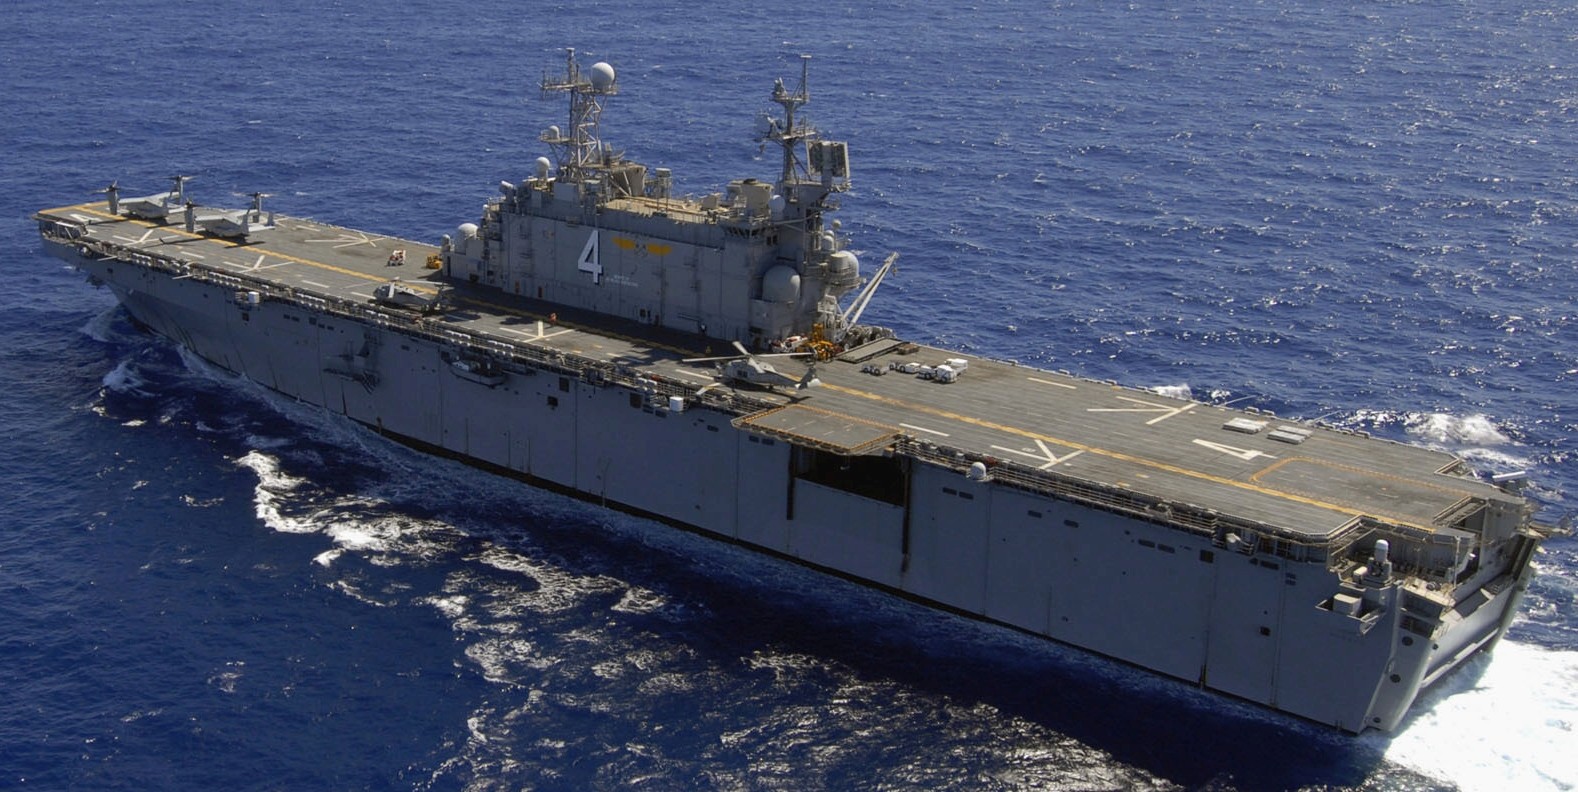 lha-4 uss nassau tarawa class amphibious assault ship us navy 26